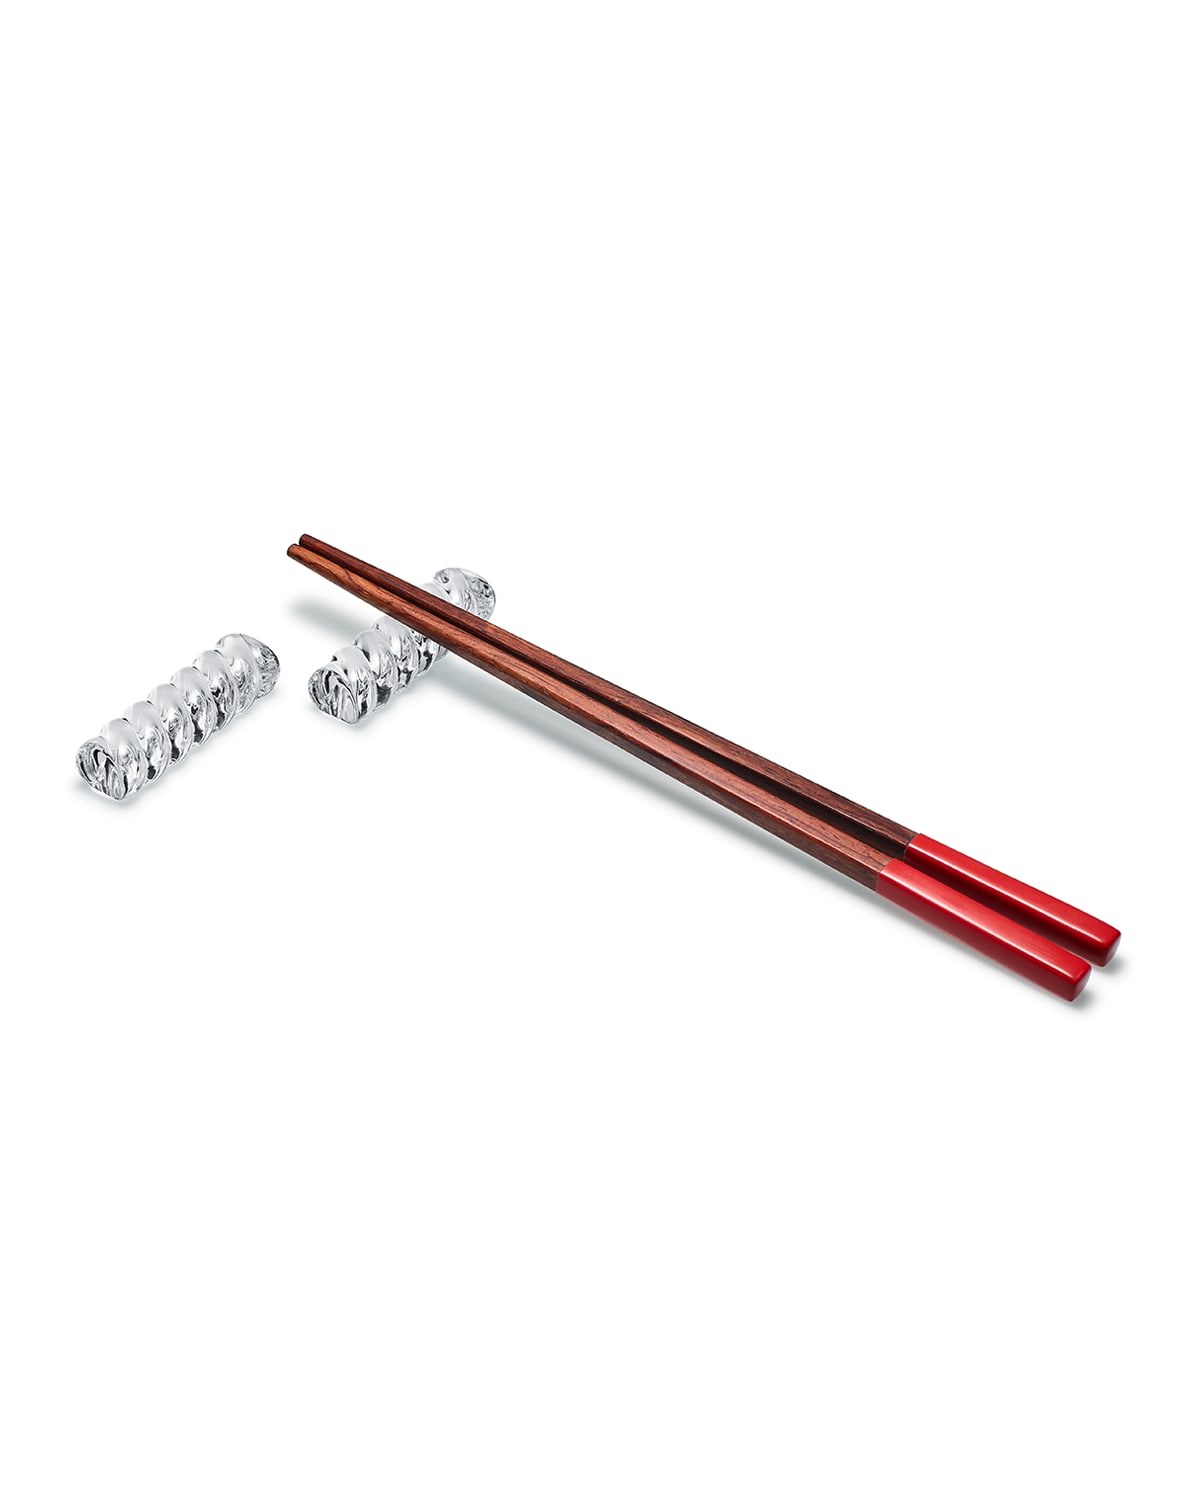 Bambou Chopstick Holders, Set of 2